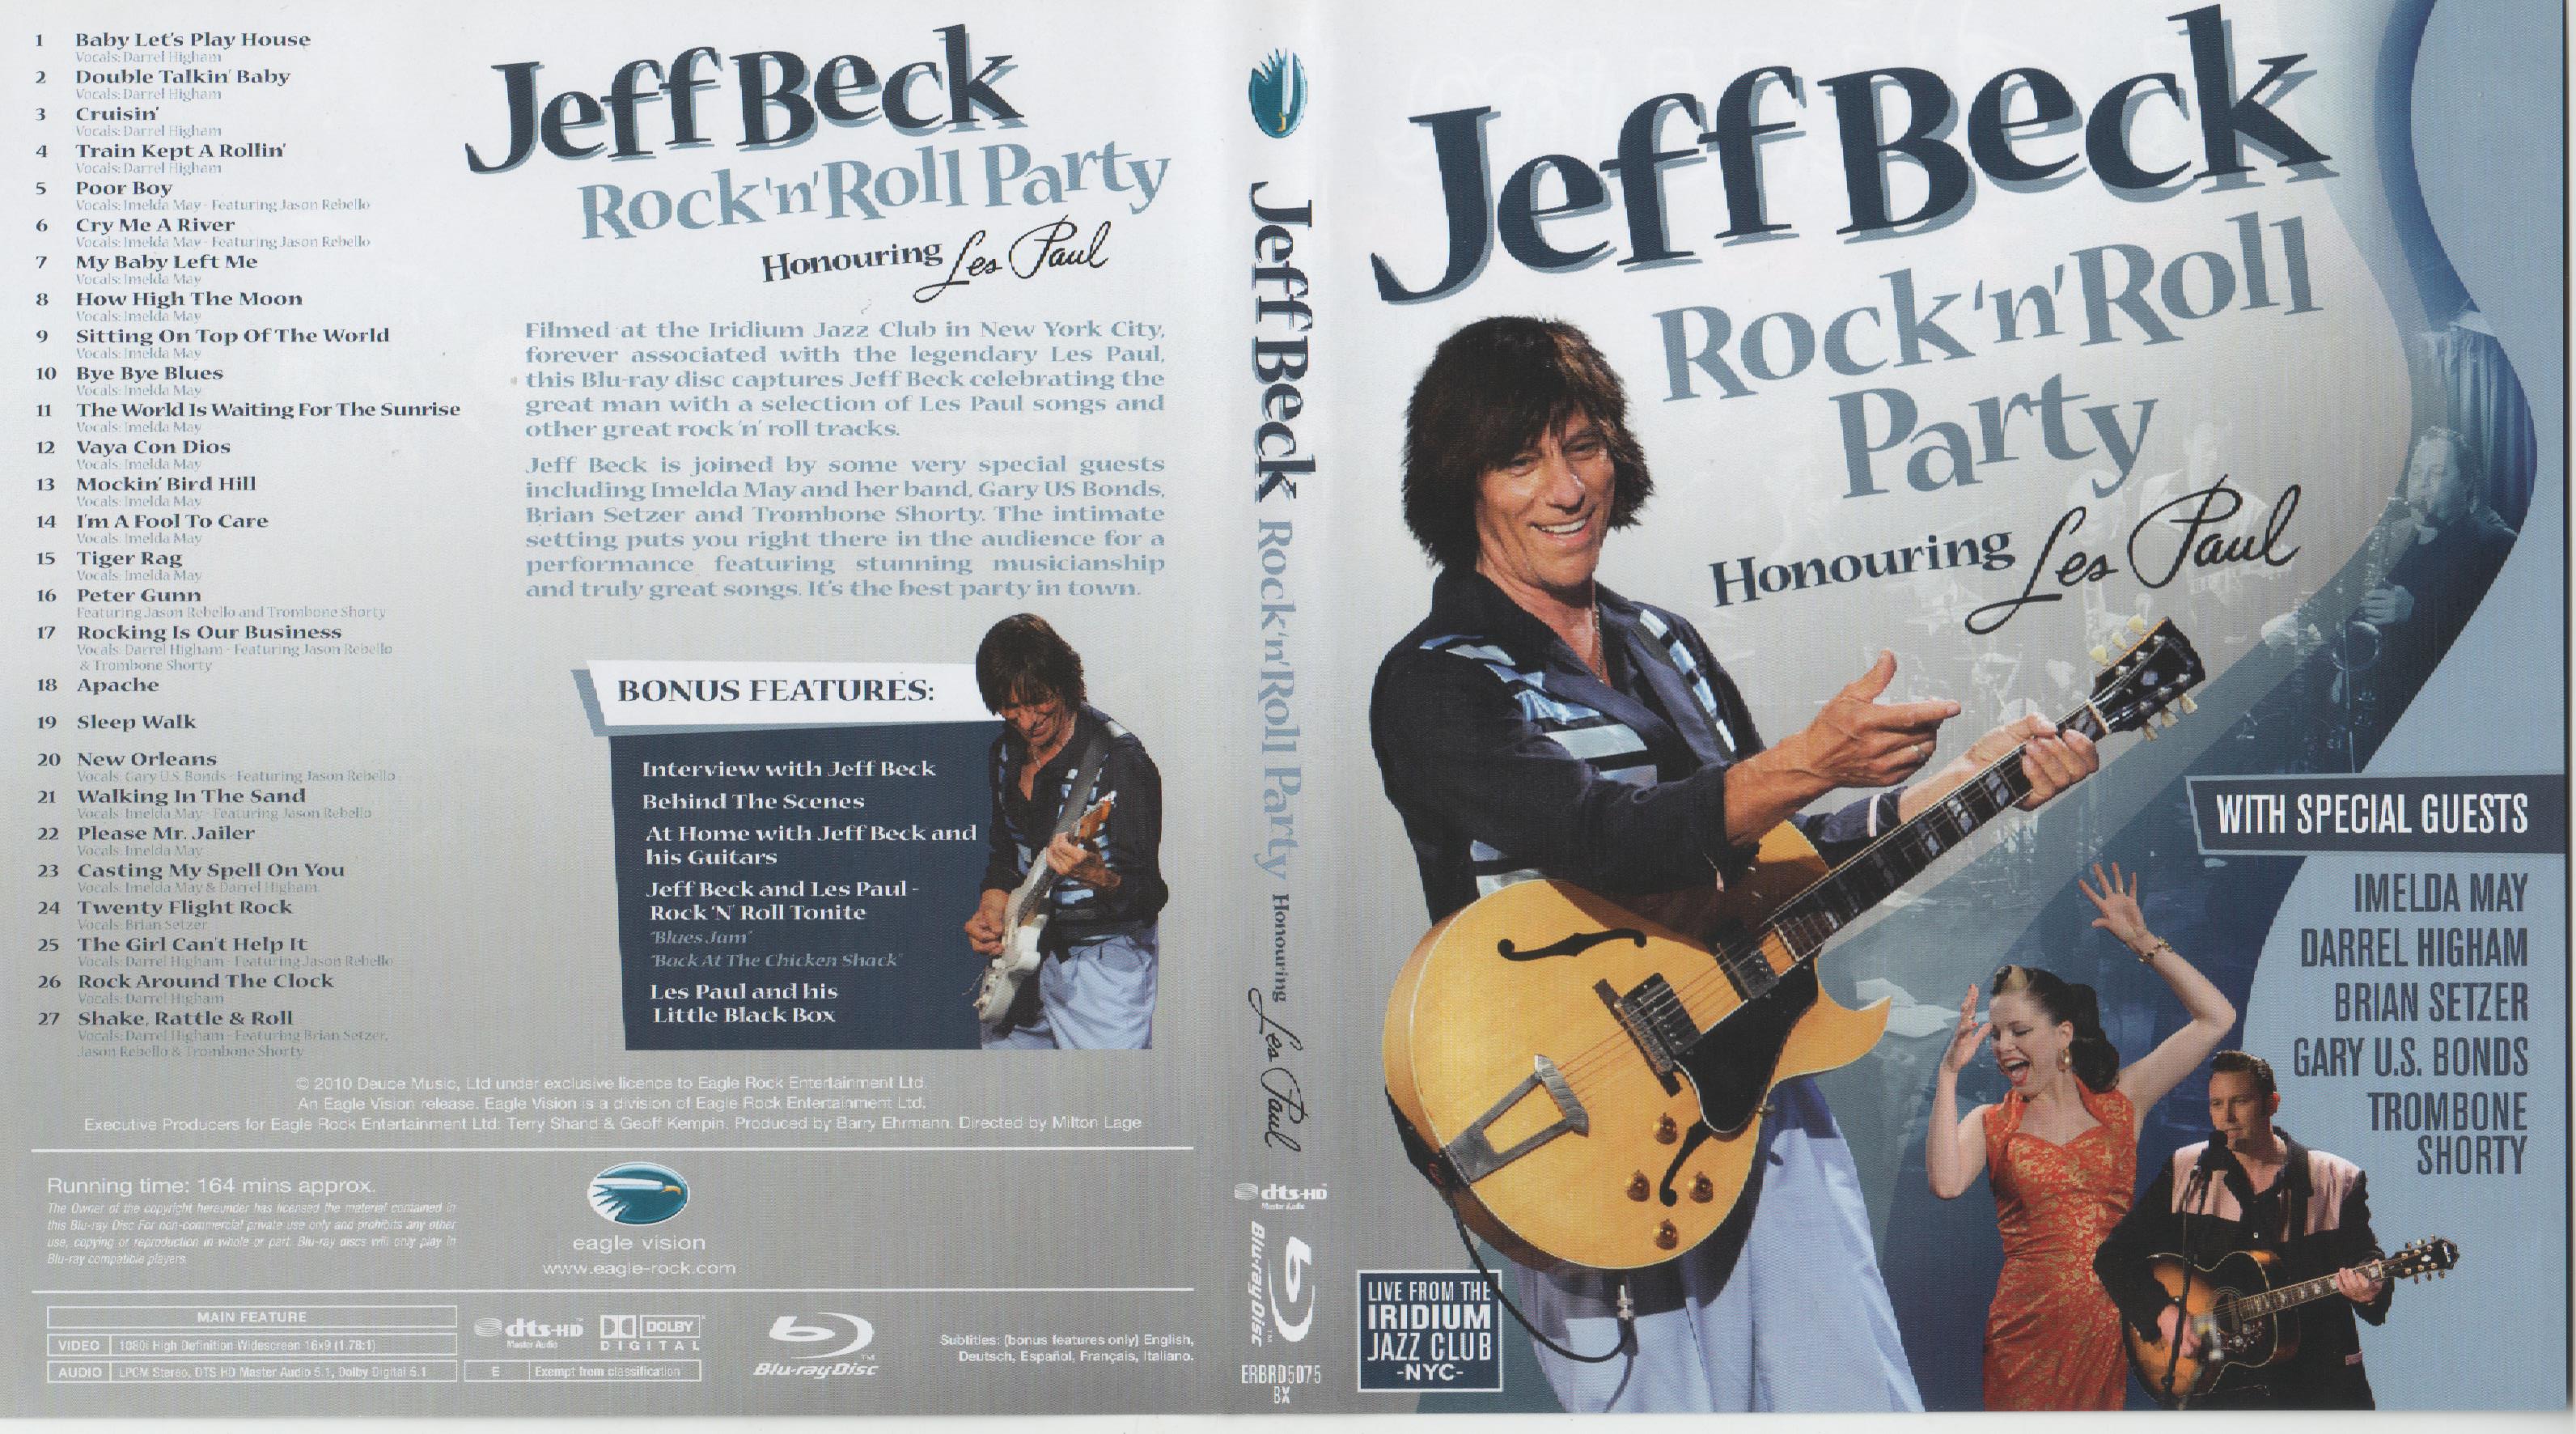 Jaquette DVD Jeff beck rock